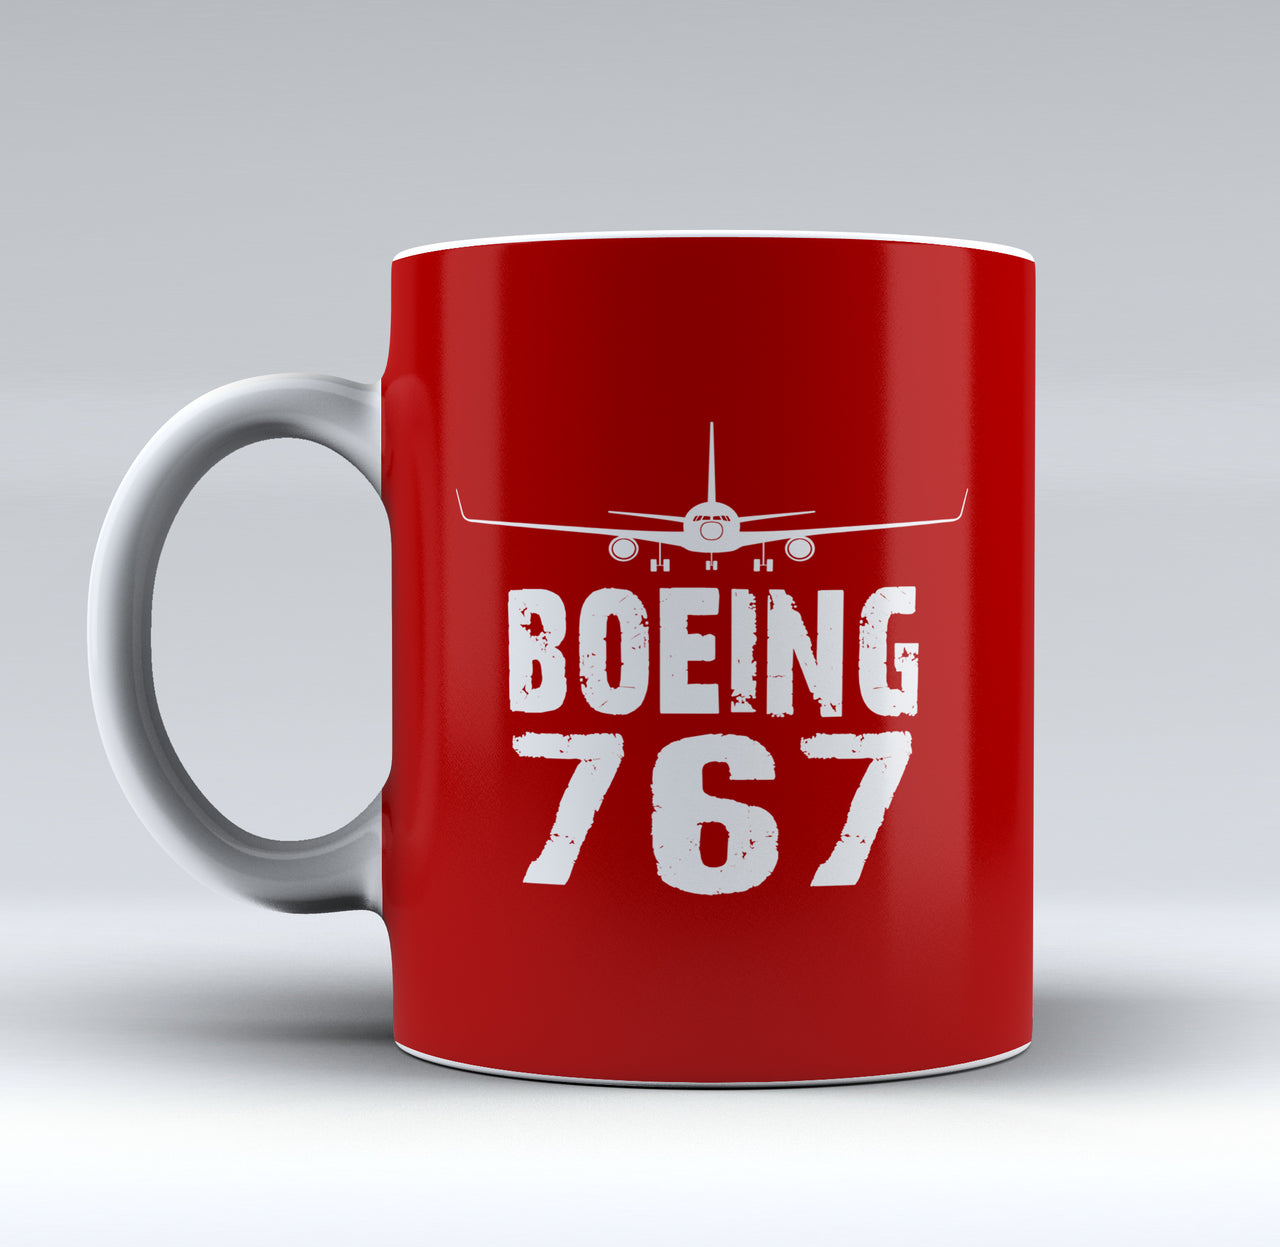 Boeing 767 & Plane Designed Mugs